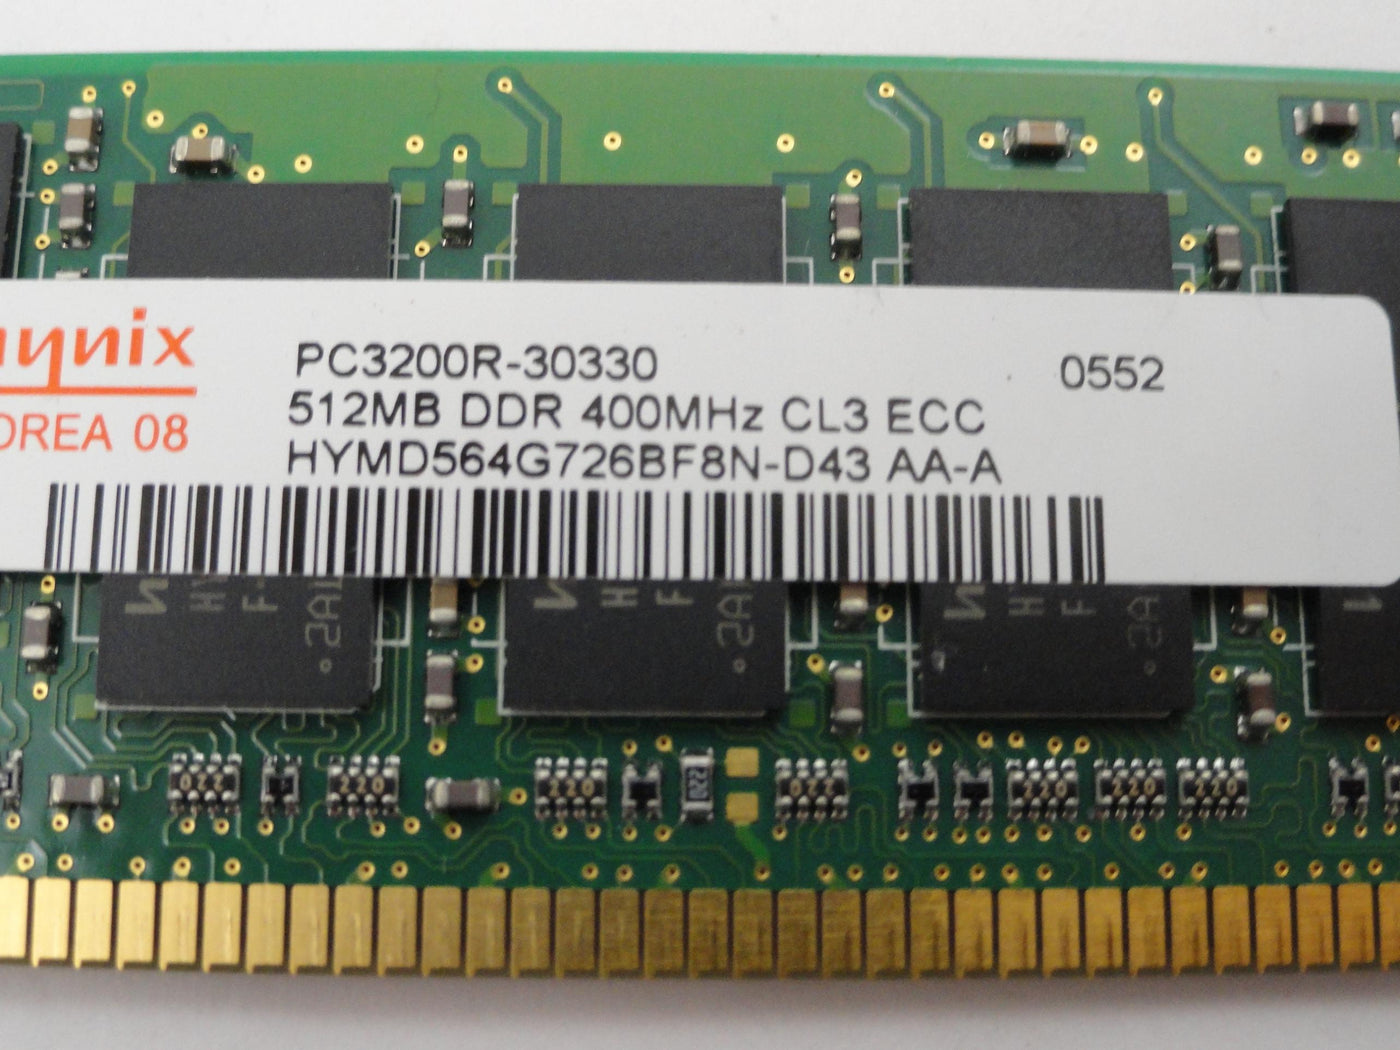 MC3807_PC3200R-30330_Hynix HP 512Mb PC3200 400Mhz DDR CL3 ECC RAM - Image2